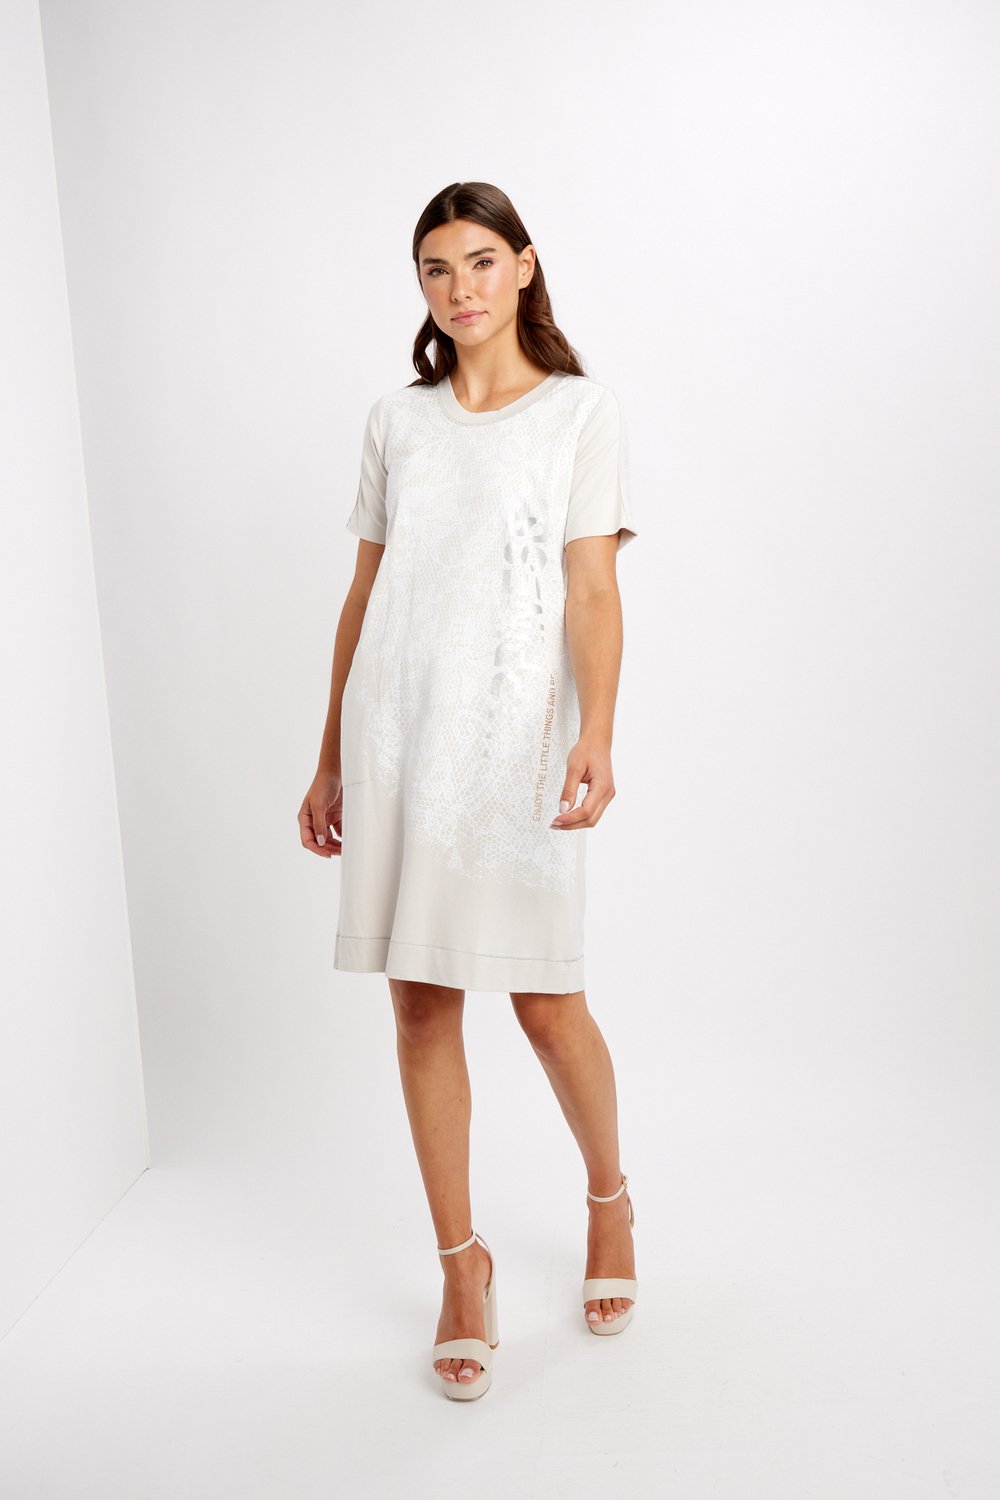 Brocade Casual Mini Dress Style 24144-6609. White